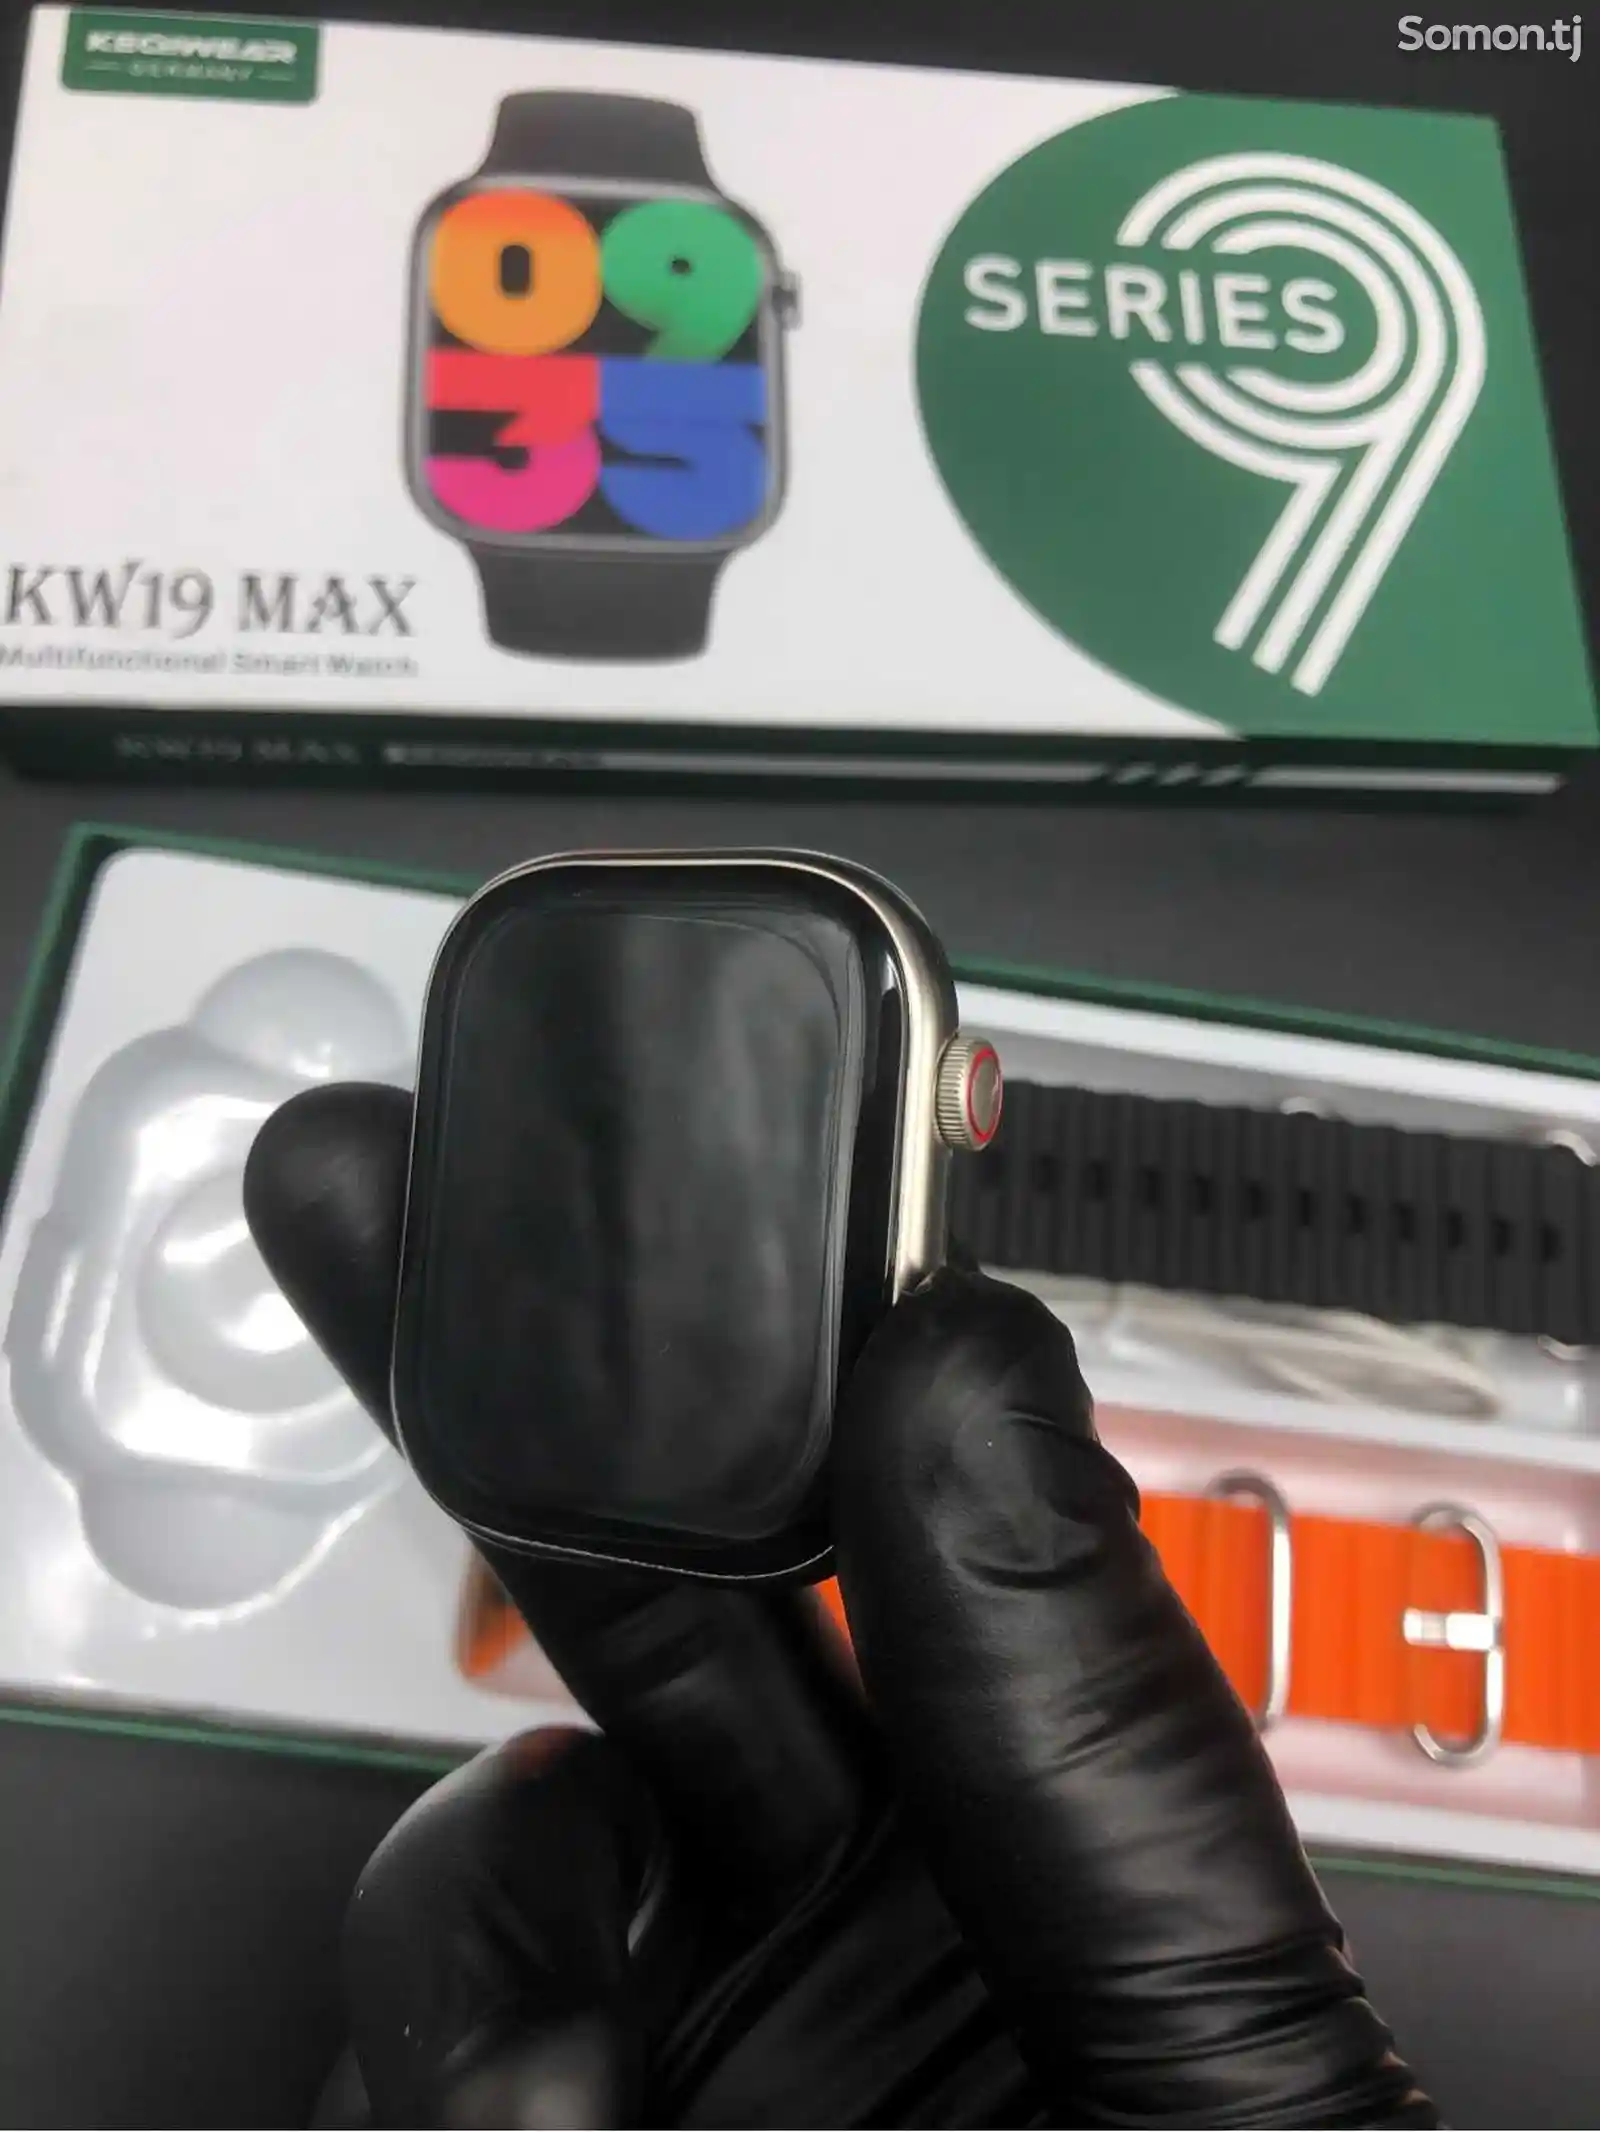 Смарт часы Smart Watch KW19 MAX 9 series-3